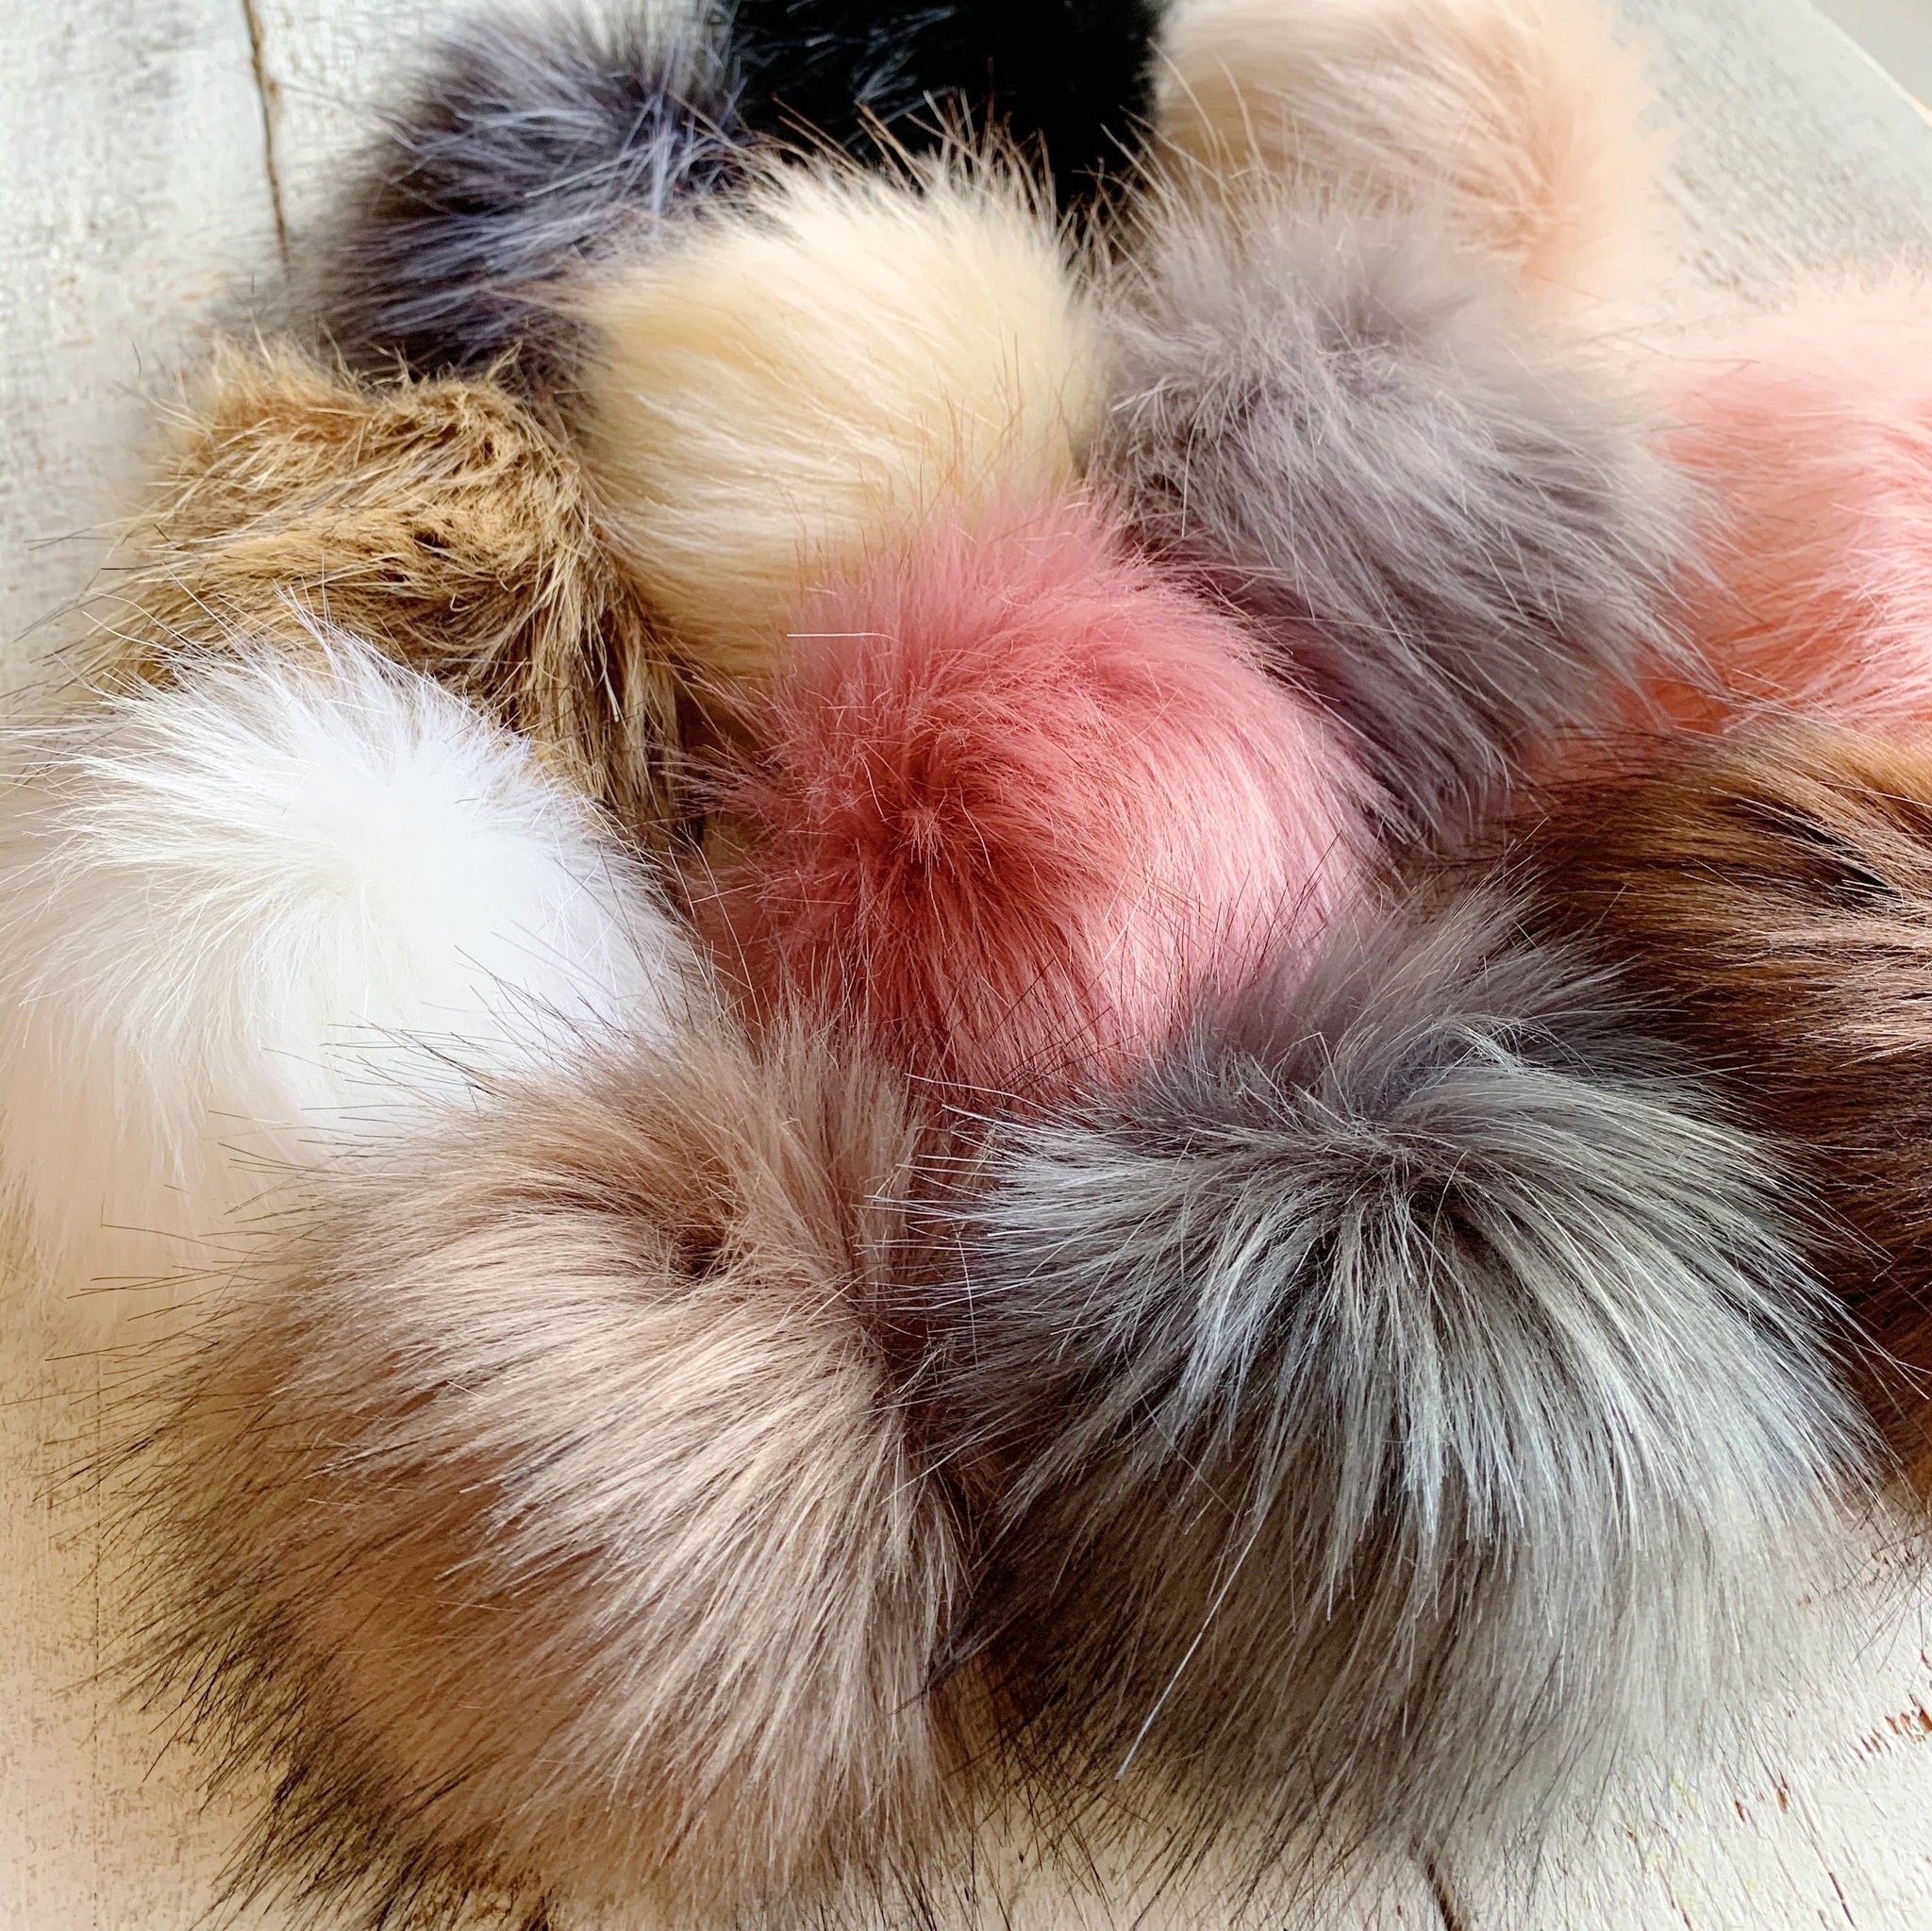 How to Make Faux Fur Pom Poms  Diy sewing, Faux fur pom pom, Loom knitting